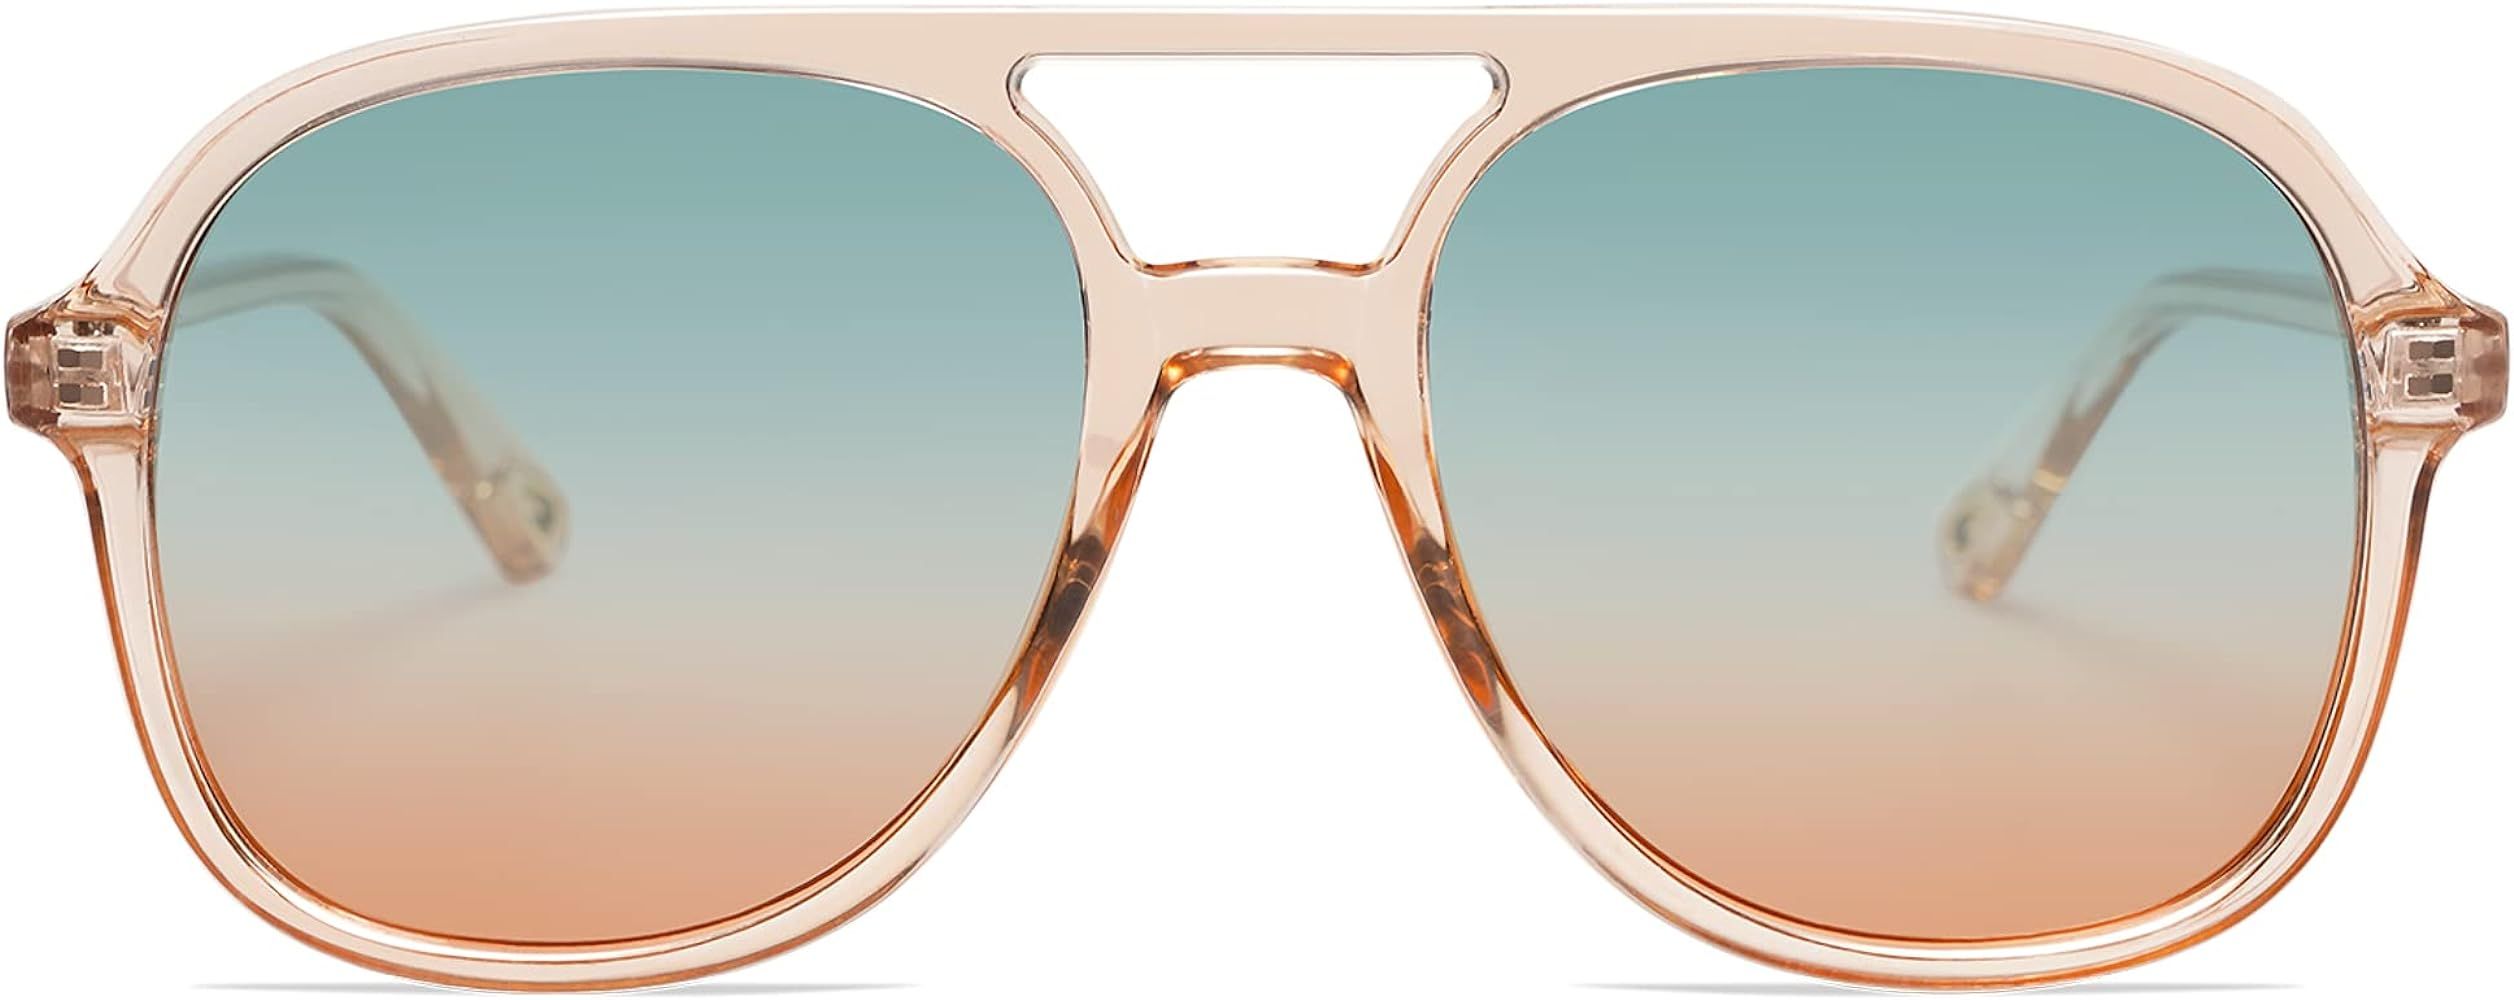 SOJOS Retro Square Polarized Aviator Sunglasses Womens Mens 70s Vintage Double Bridge Sun Glasses... | Amazon (US)